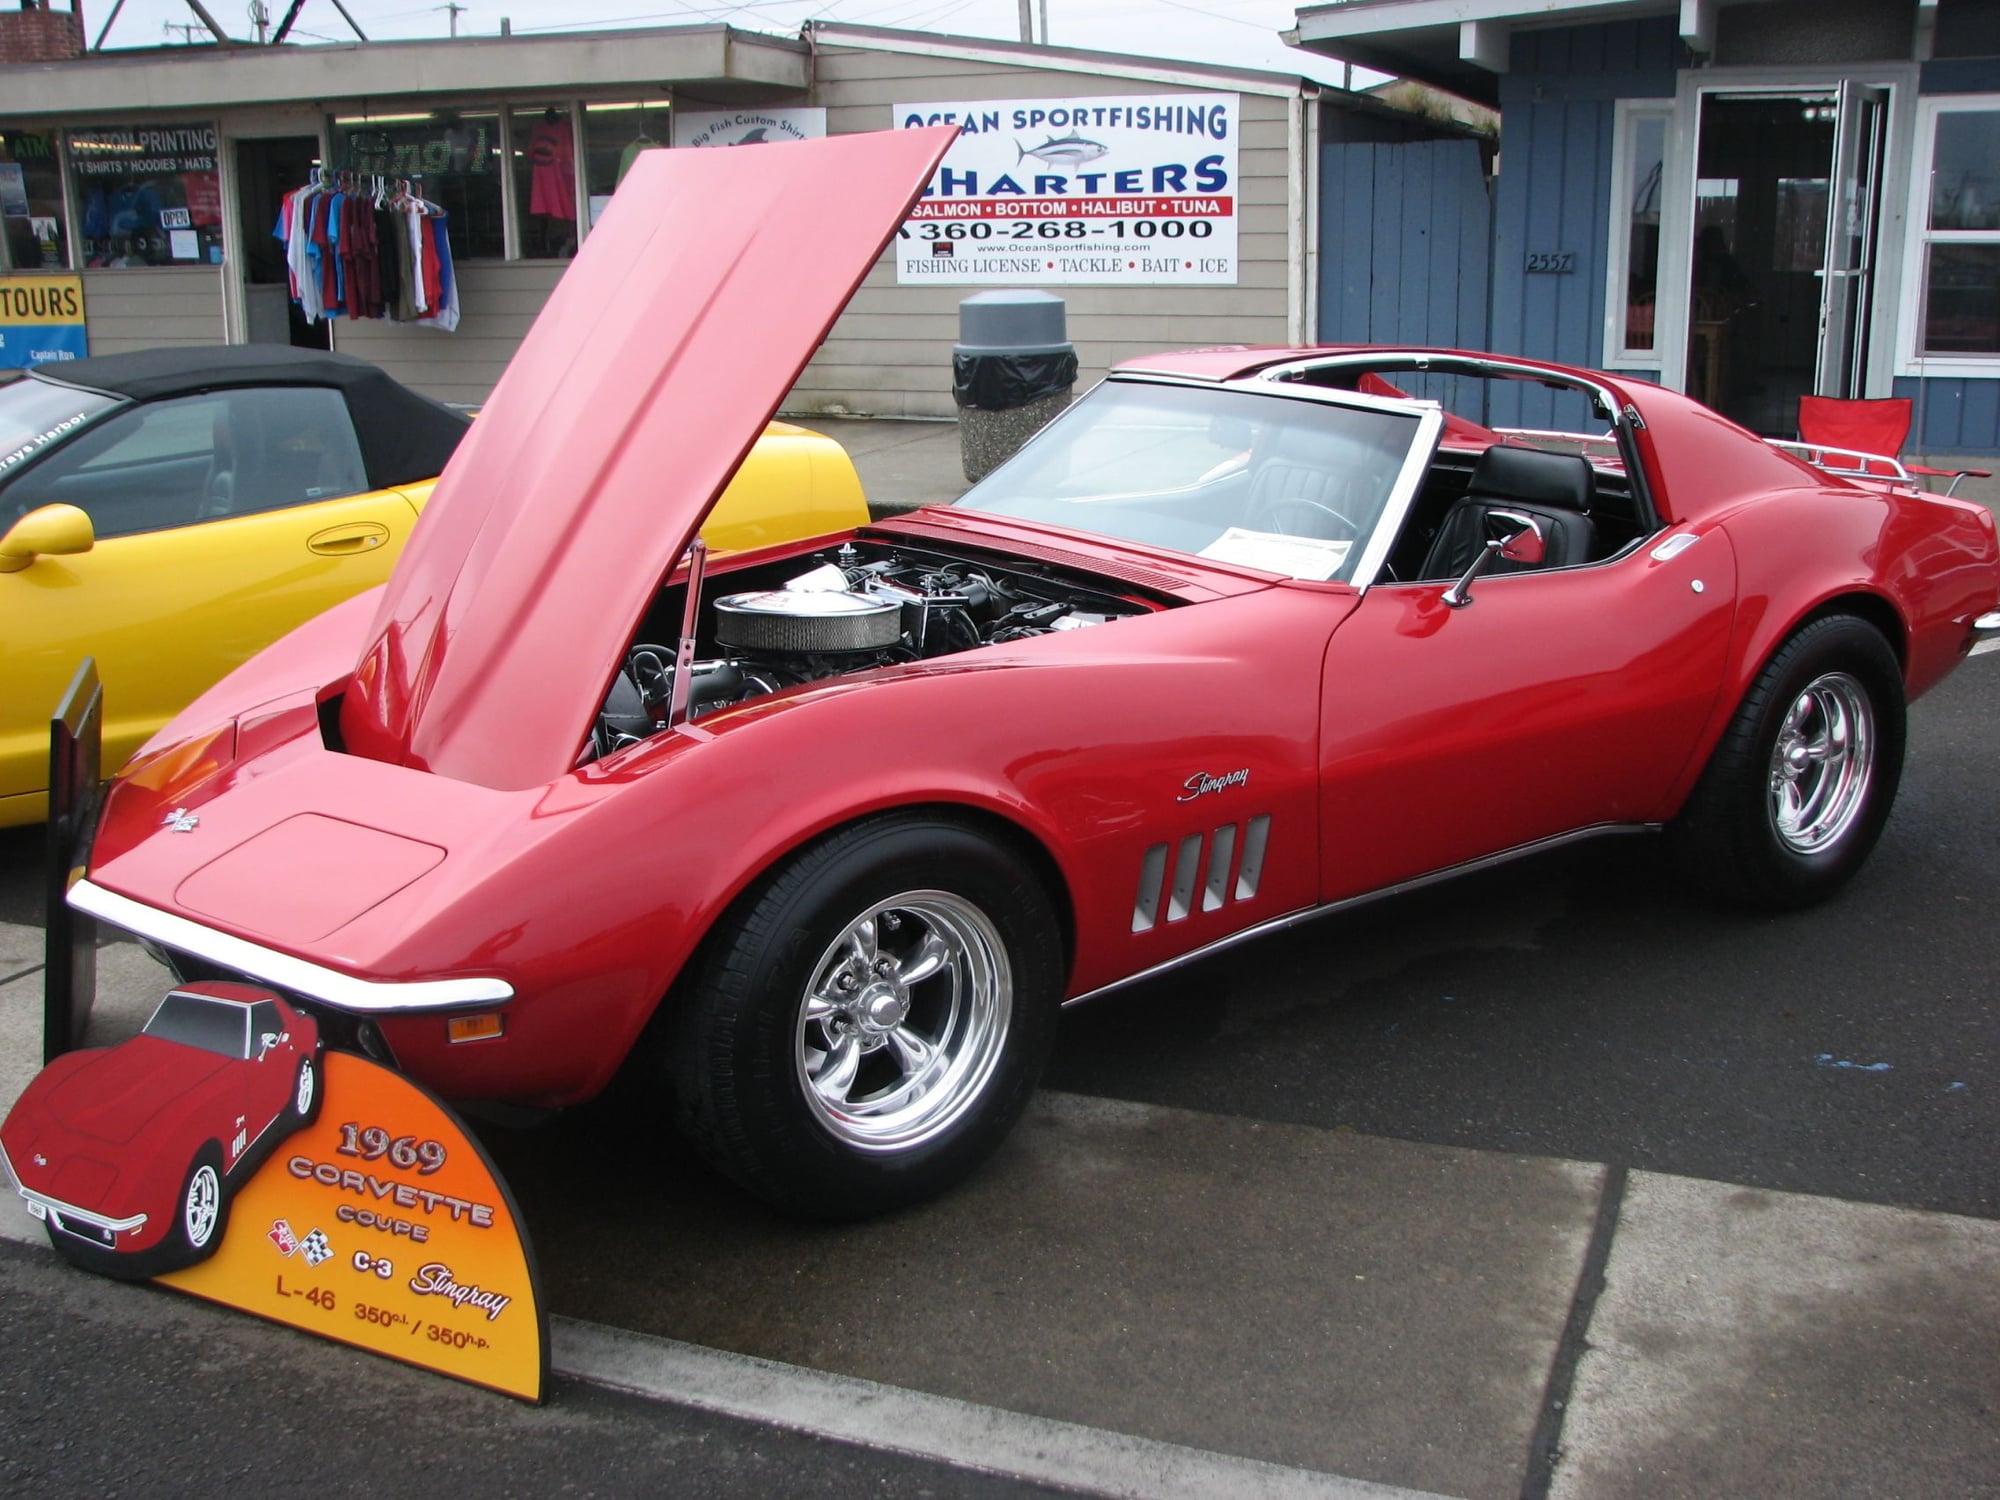 Pictures of Westport Corvette Show 8/31/19 - CorvetteForum - Chevrolet ...